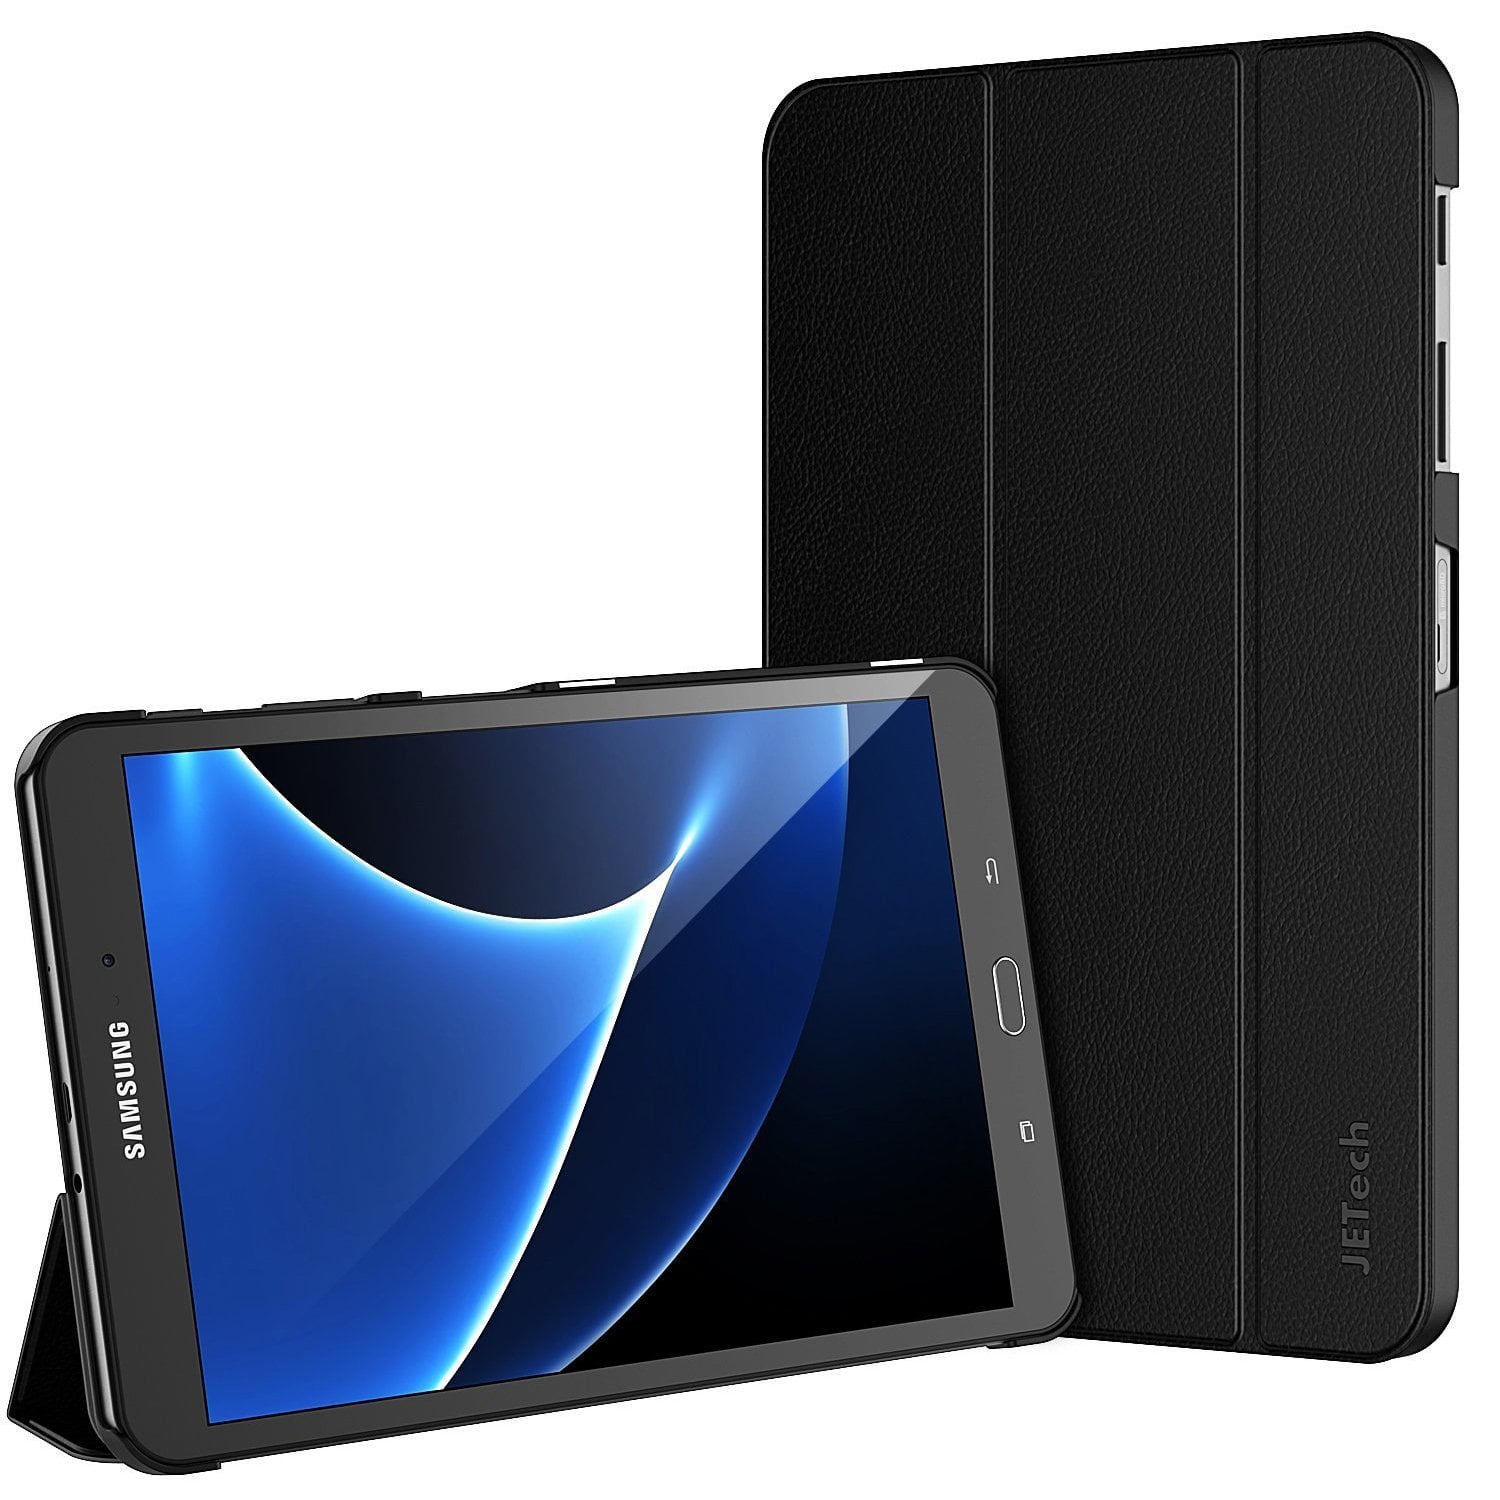 JETech Case for Galaxy Tab S5e 10.5 2019 Black SM-T720/T725 Auto Wake/Sleep